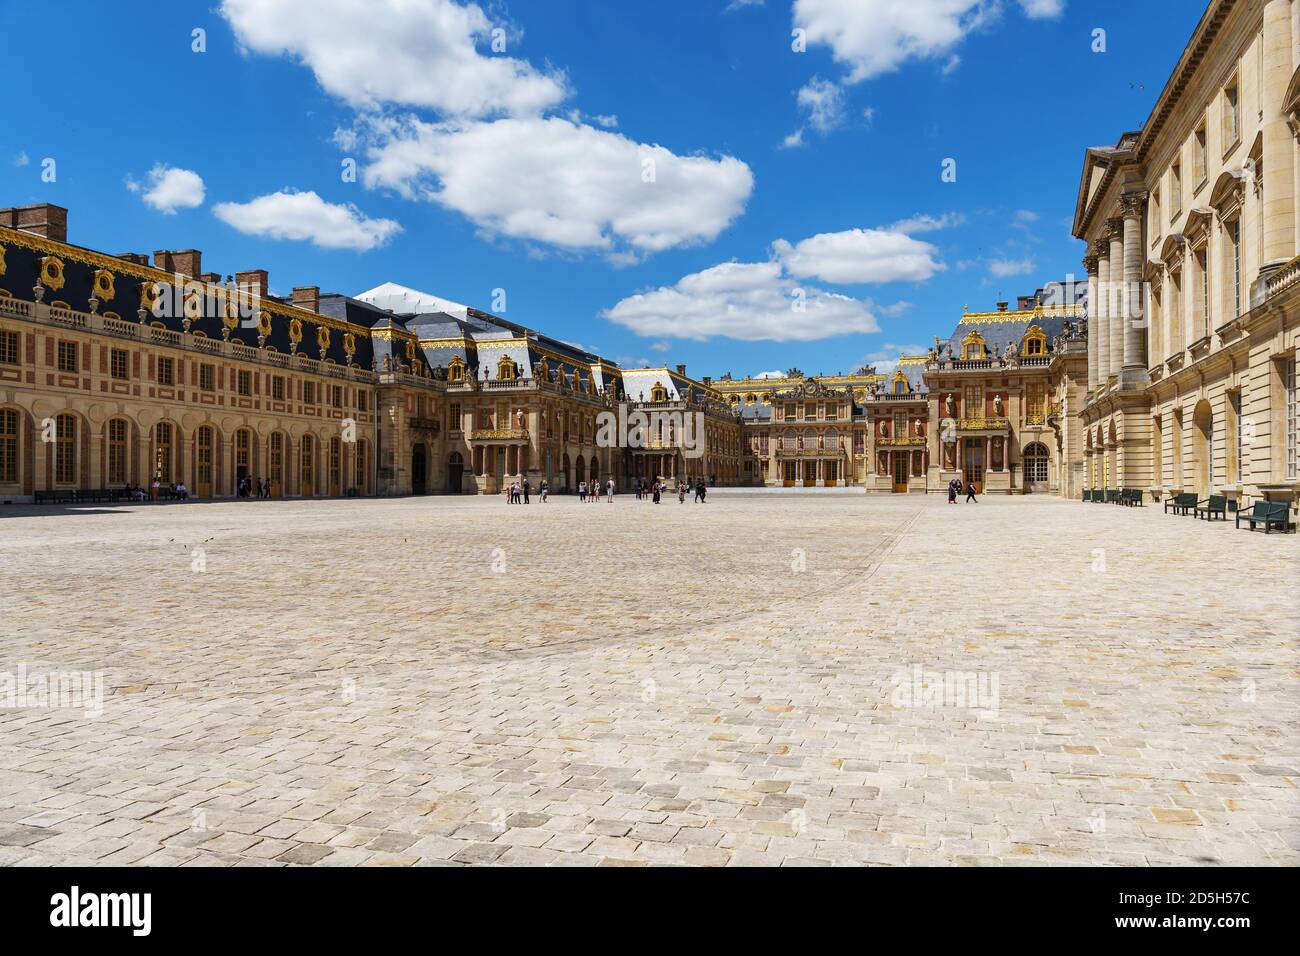 Versailles Palace entrance courtyard - France Stock Photo